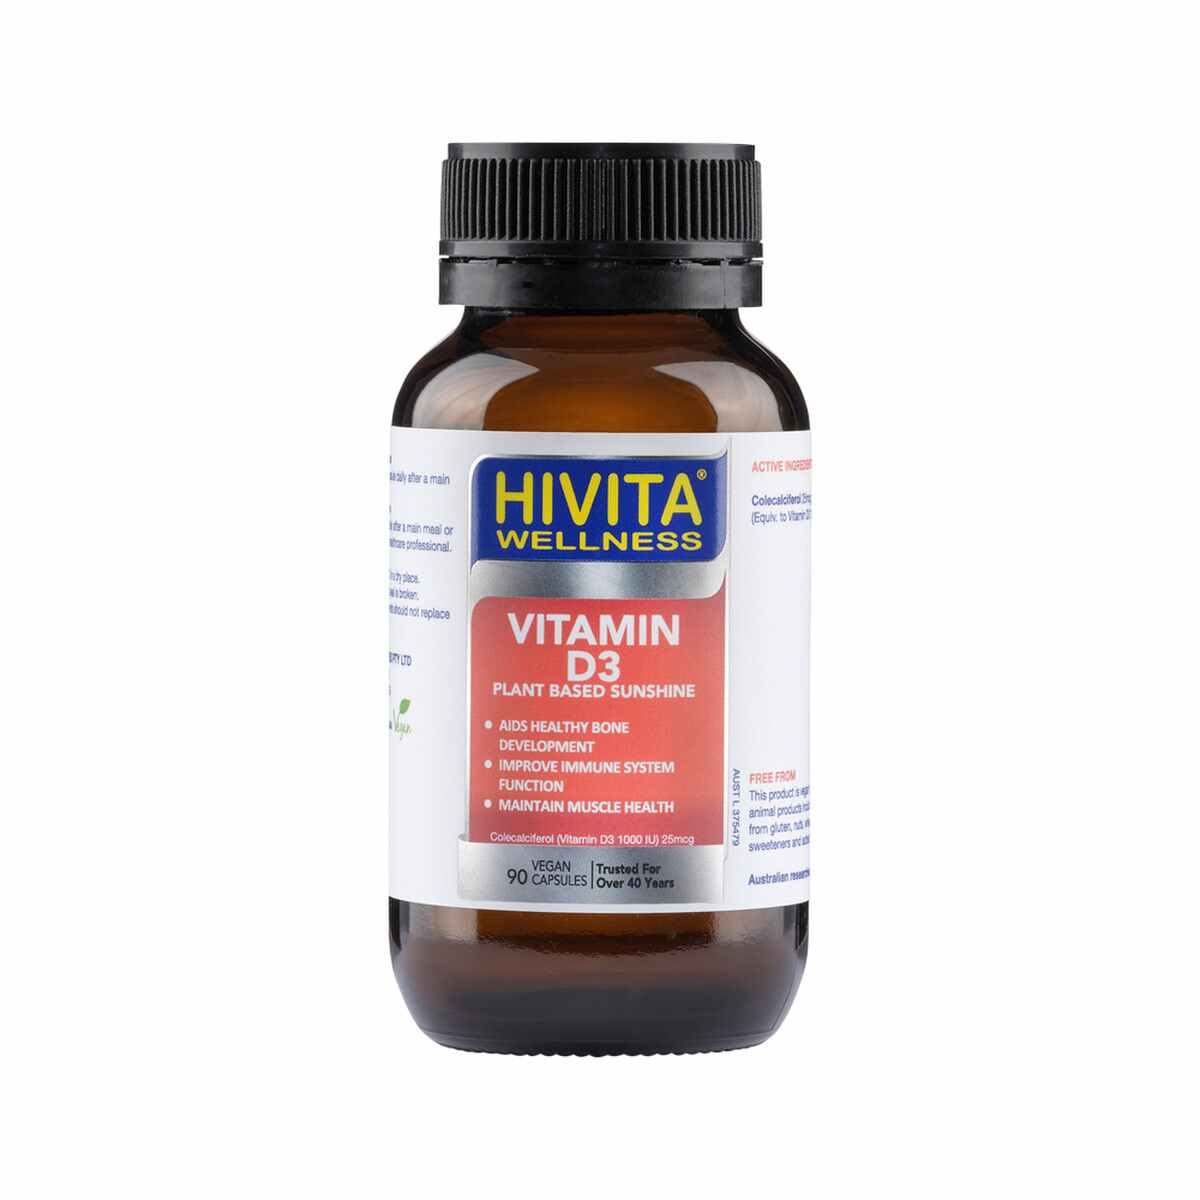 HiVita - Wellness Vitamin D3 (Plant Based Sunshine)